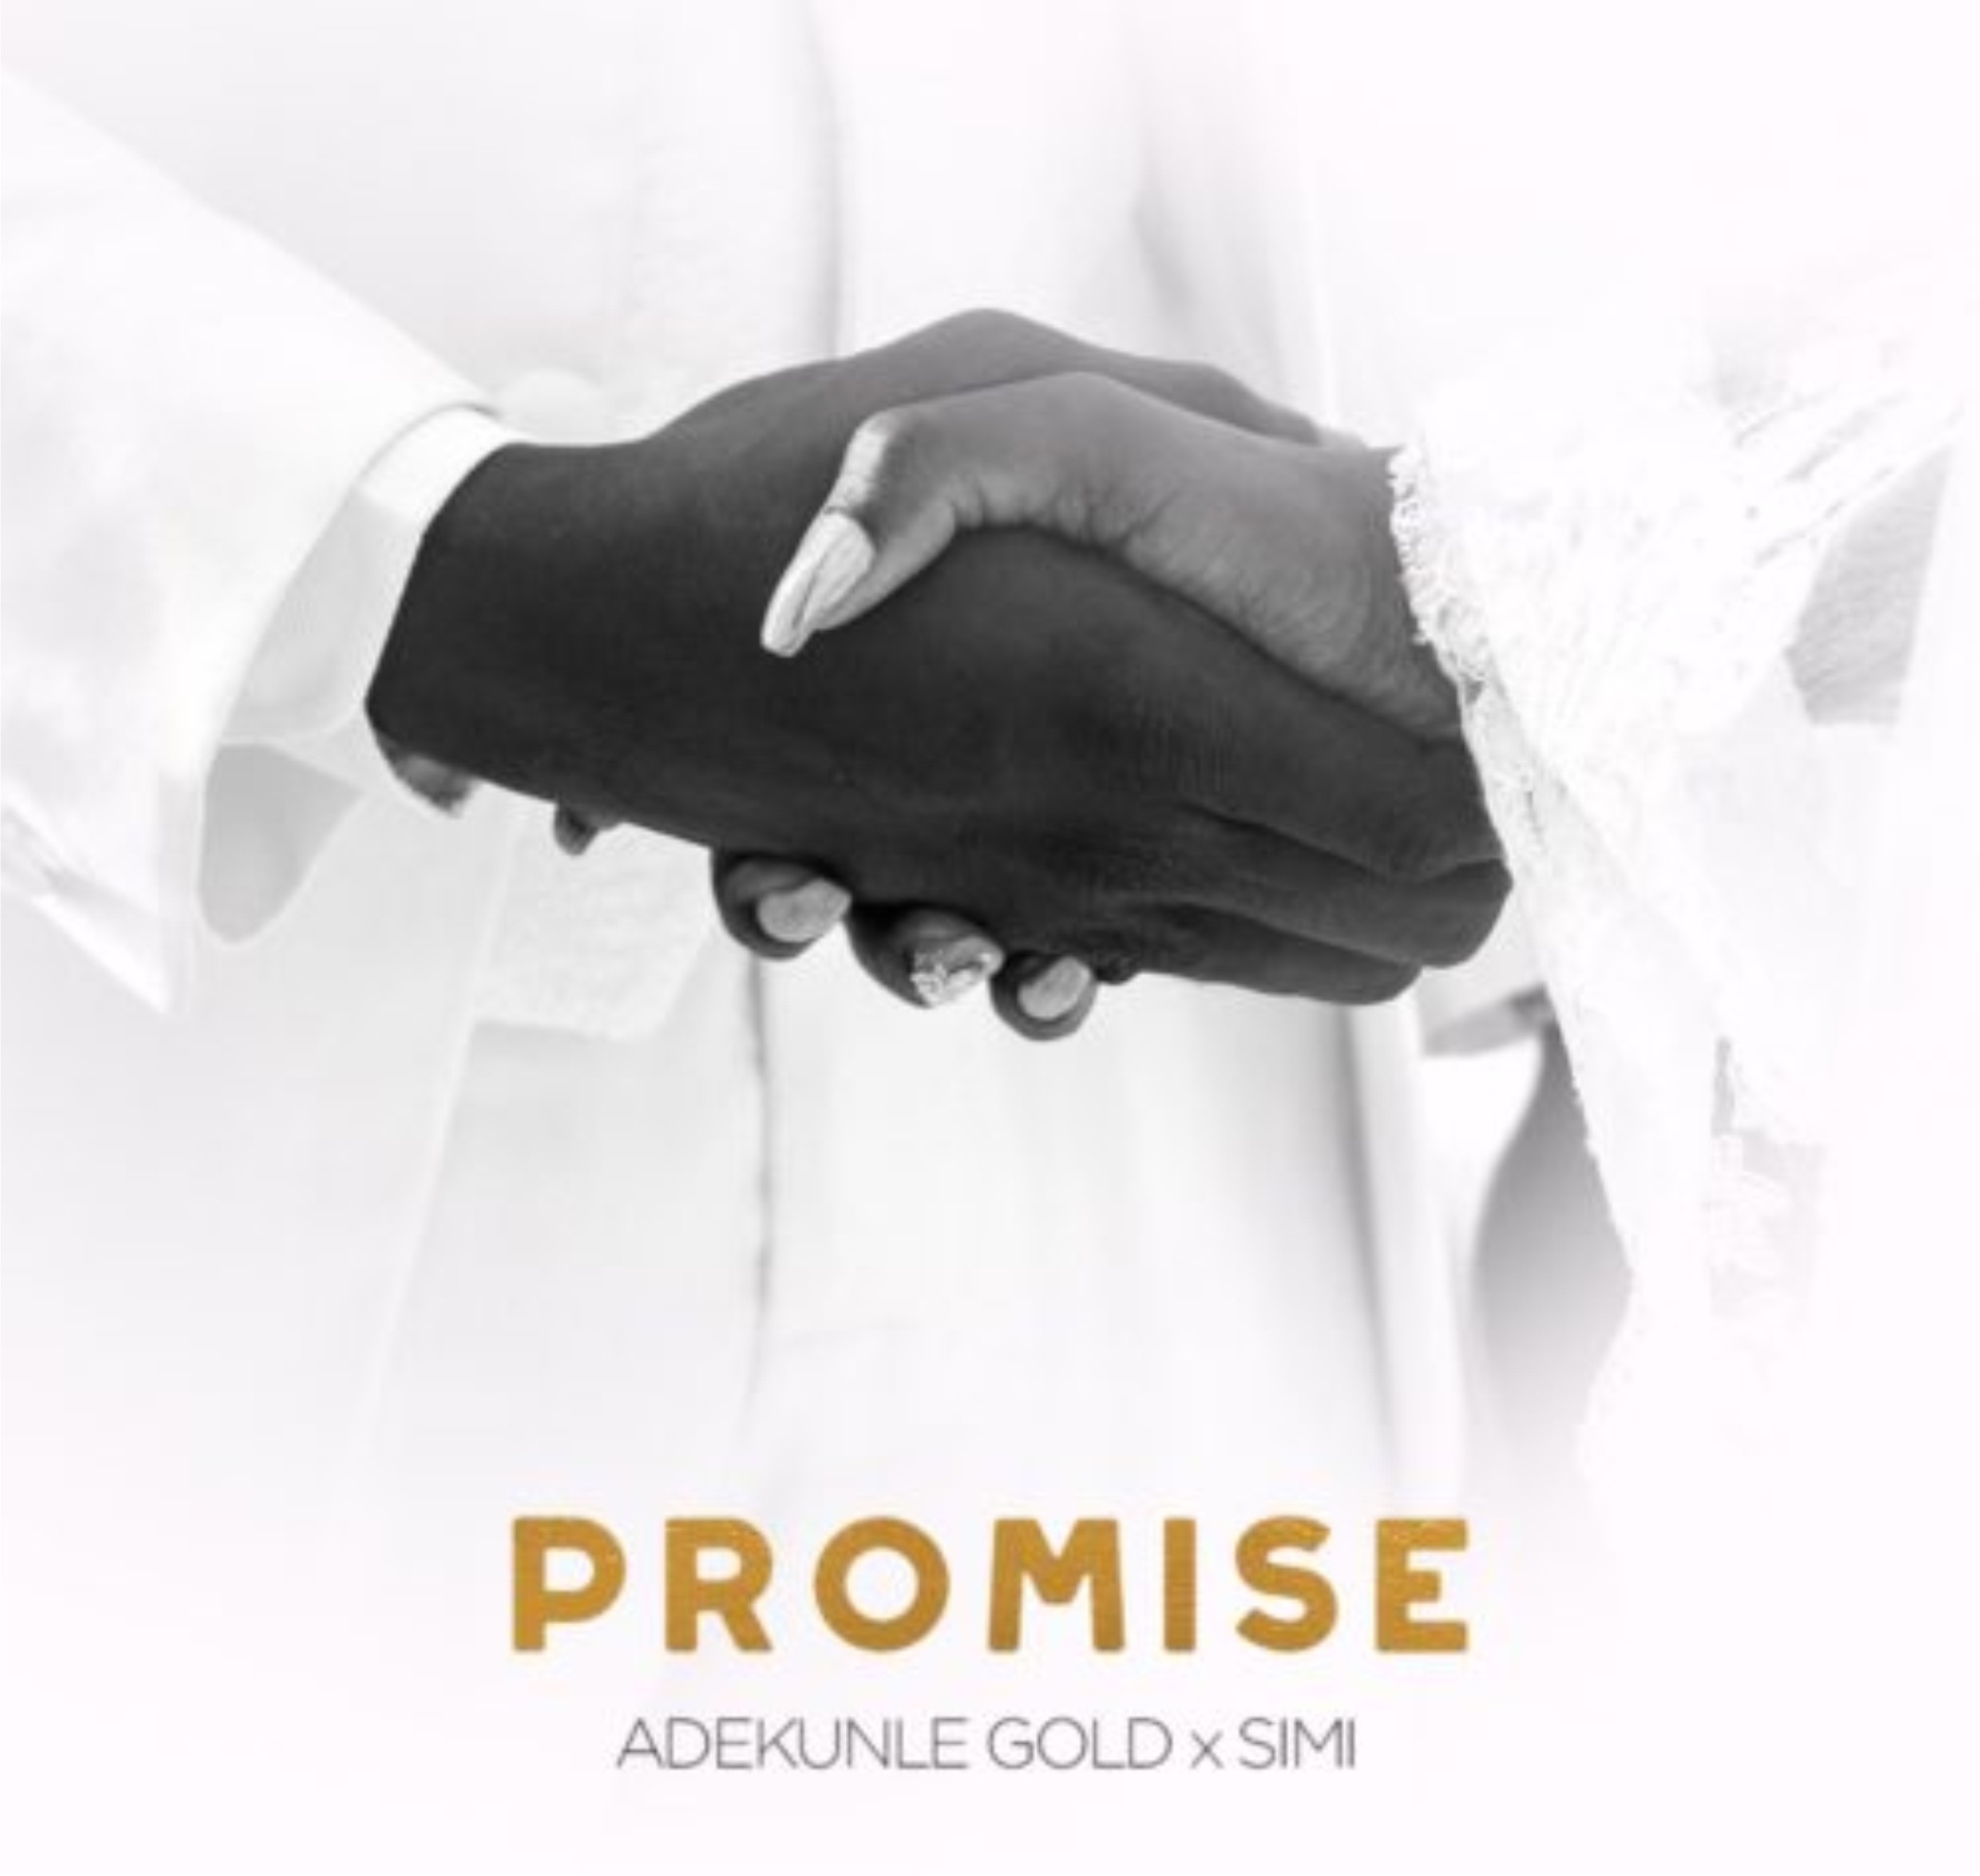 Download Music: Adekunle Gold x Simi – “Promise”